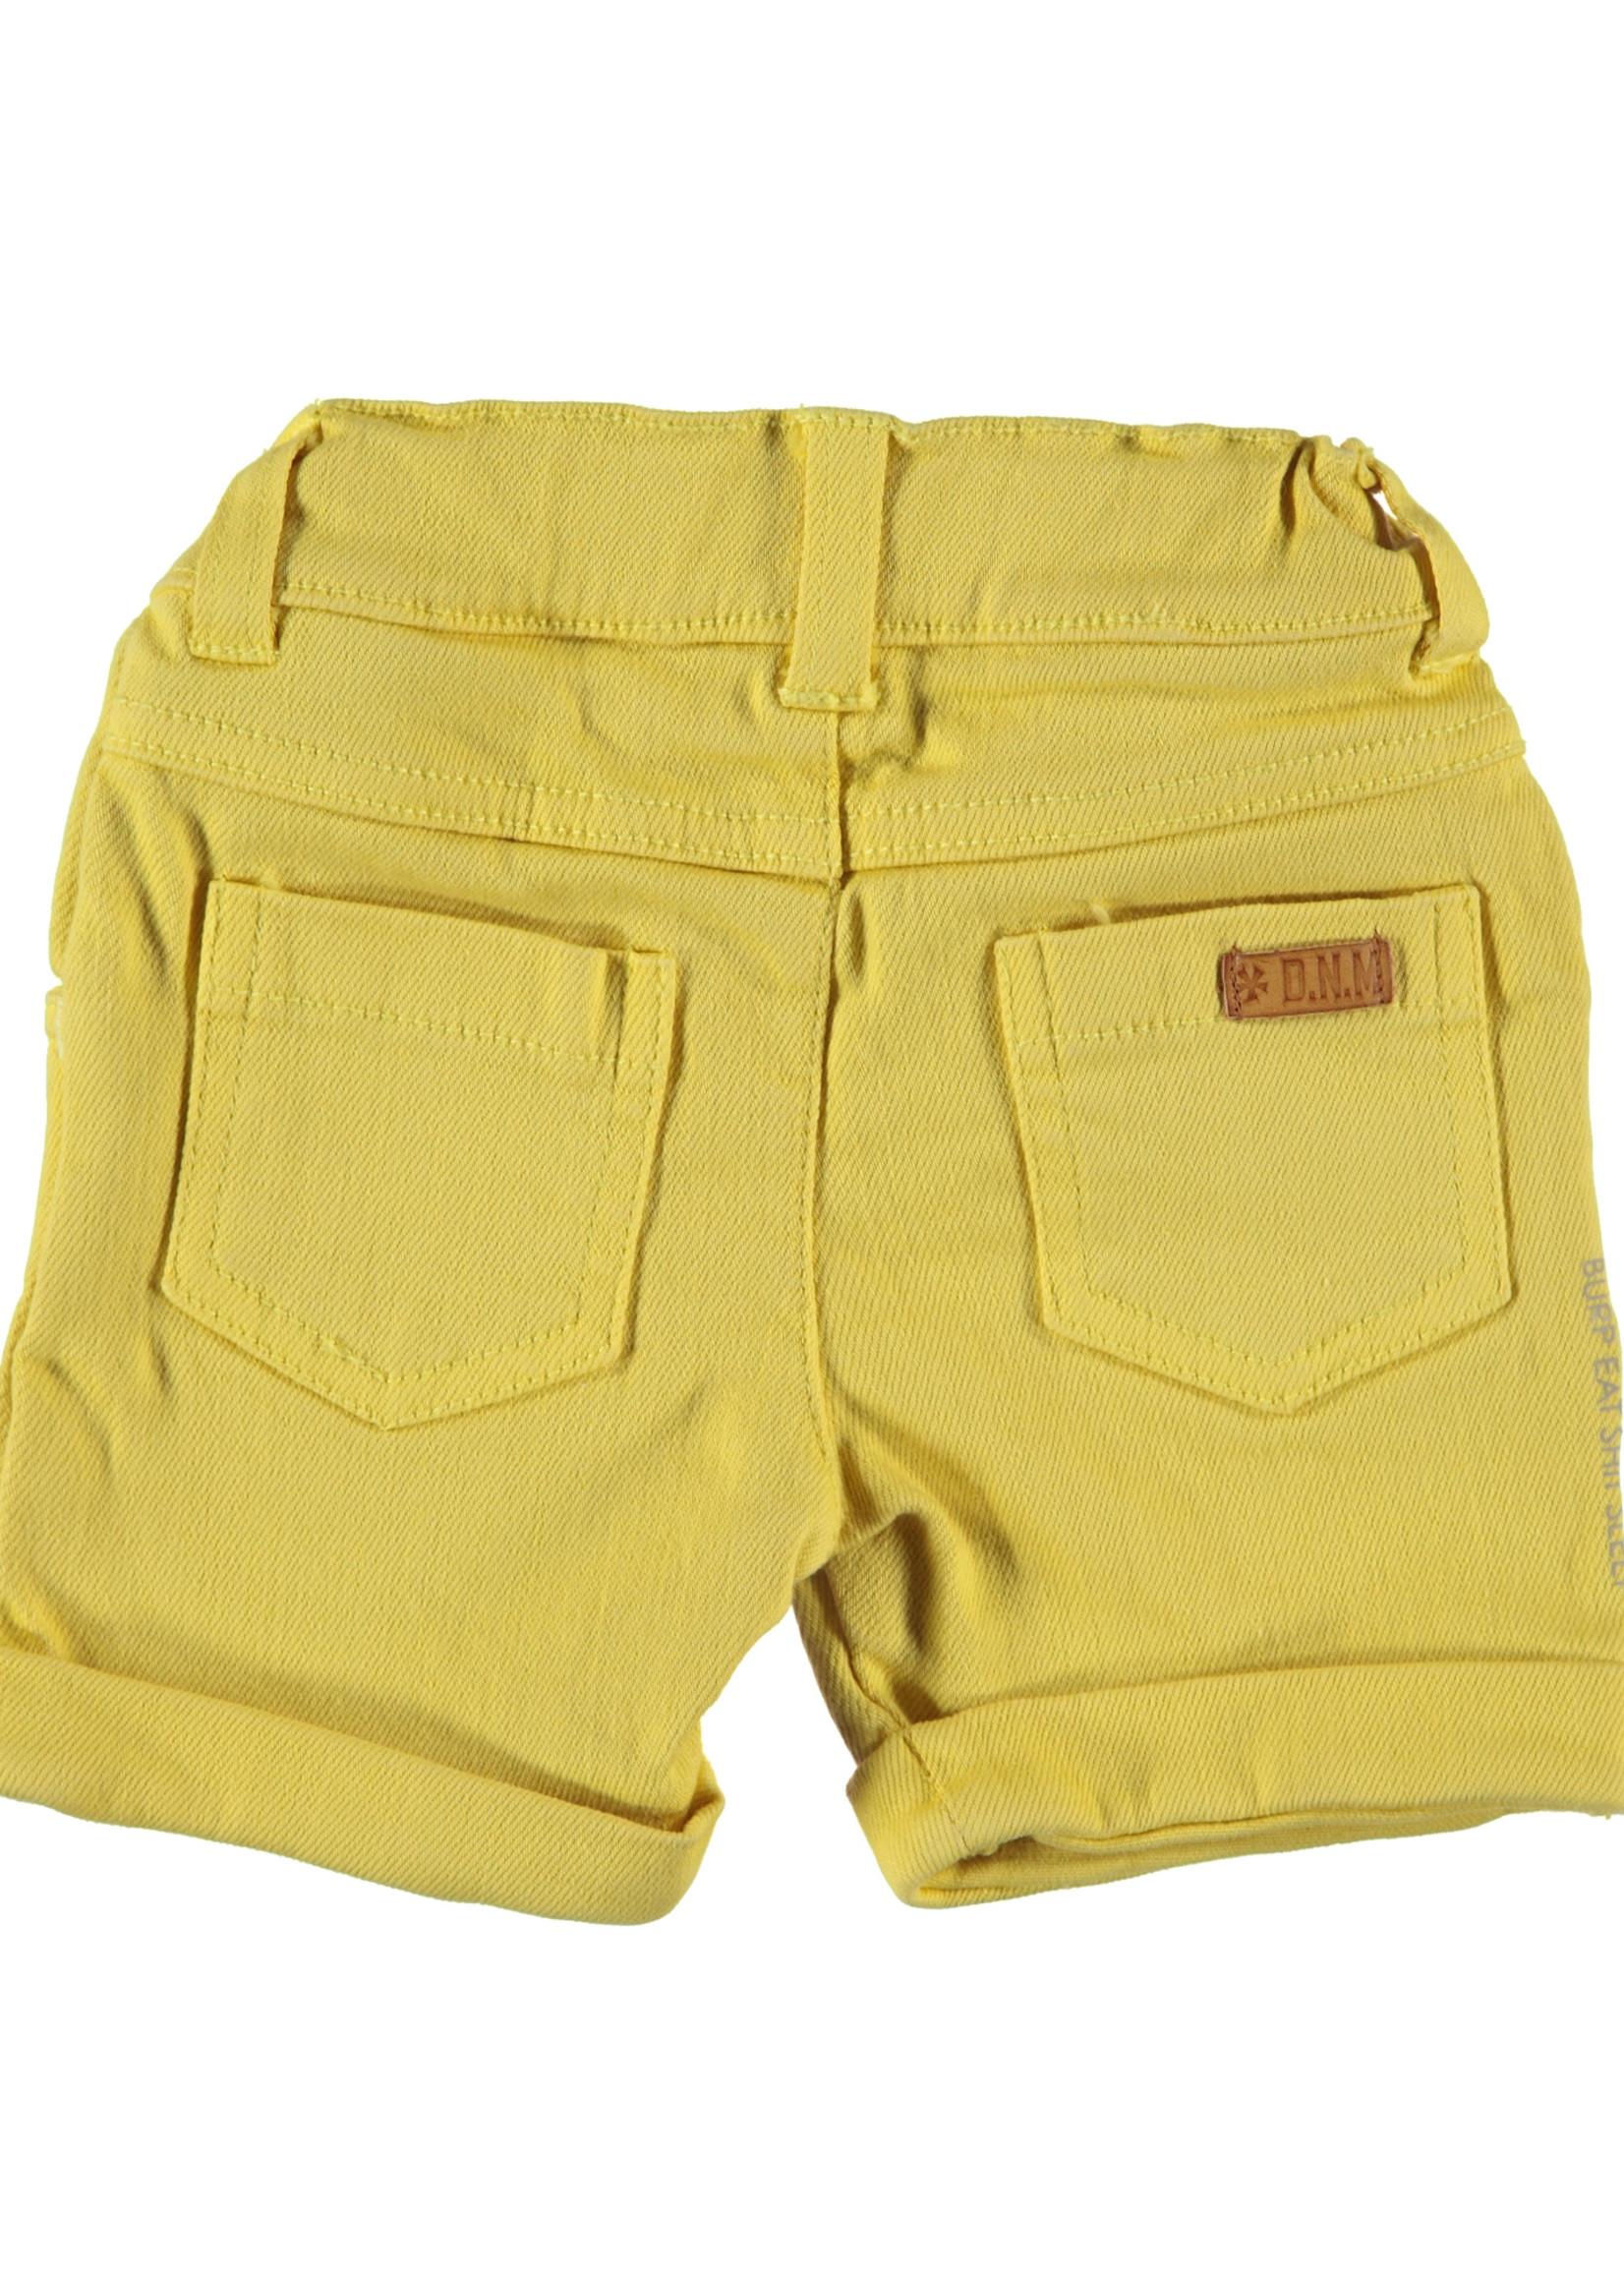 B.E.S.S. Shorts Denim, Yellow